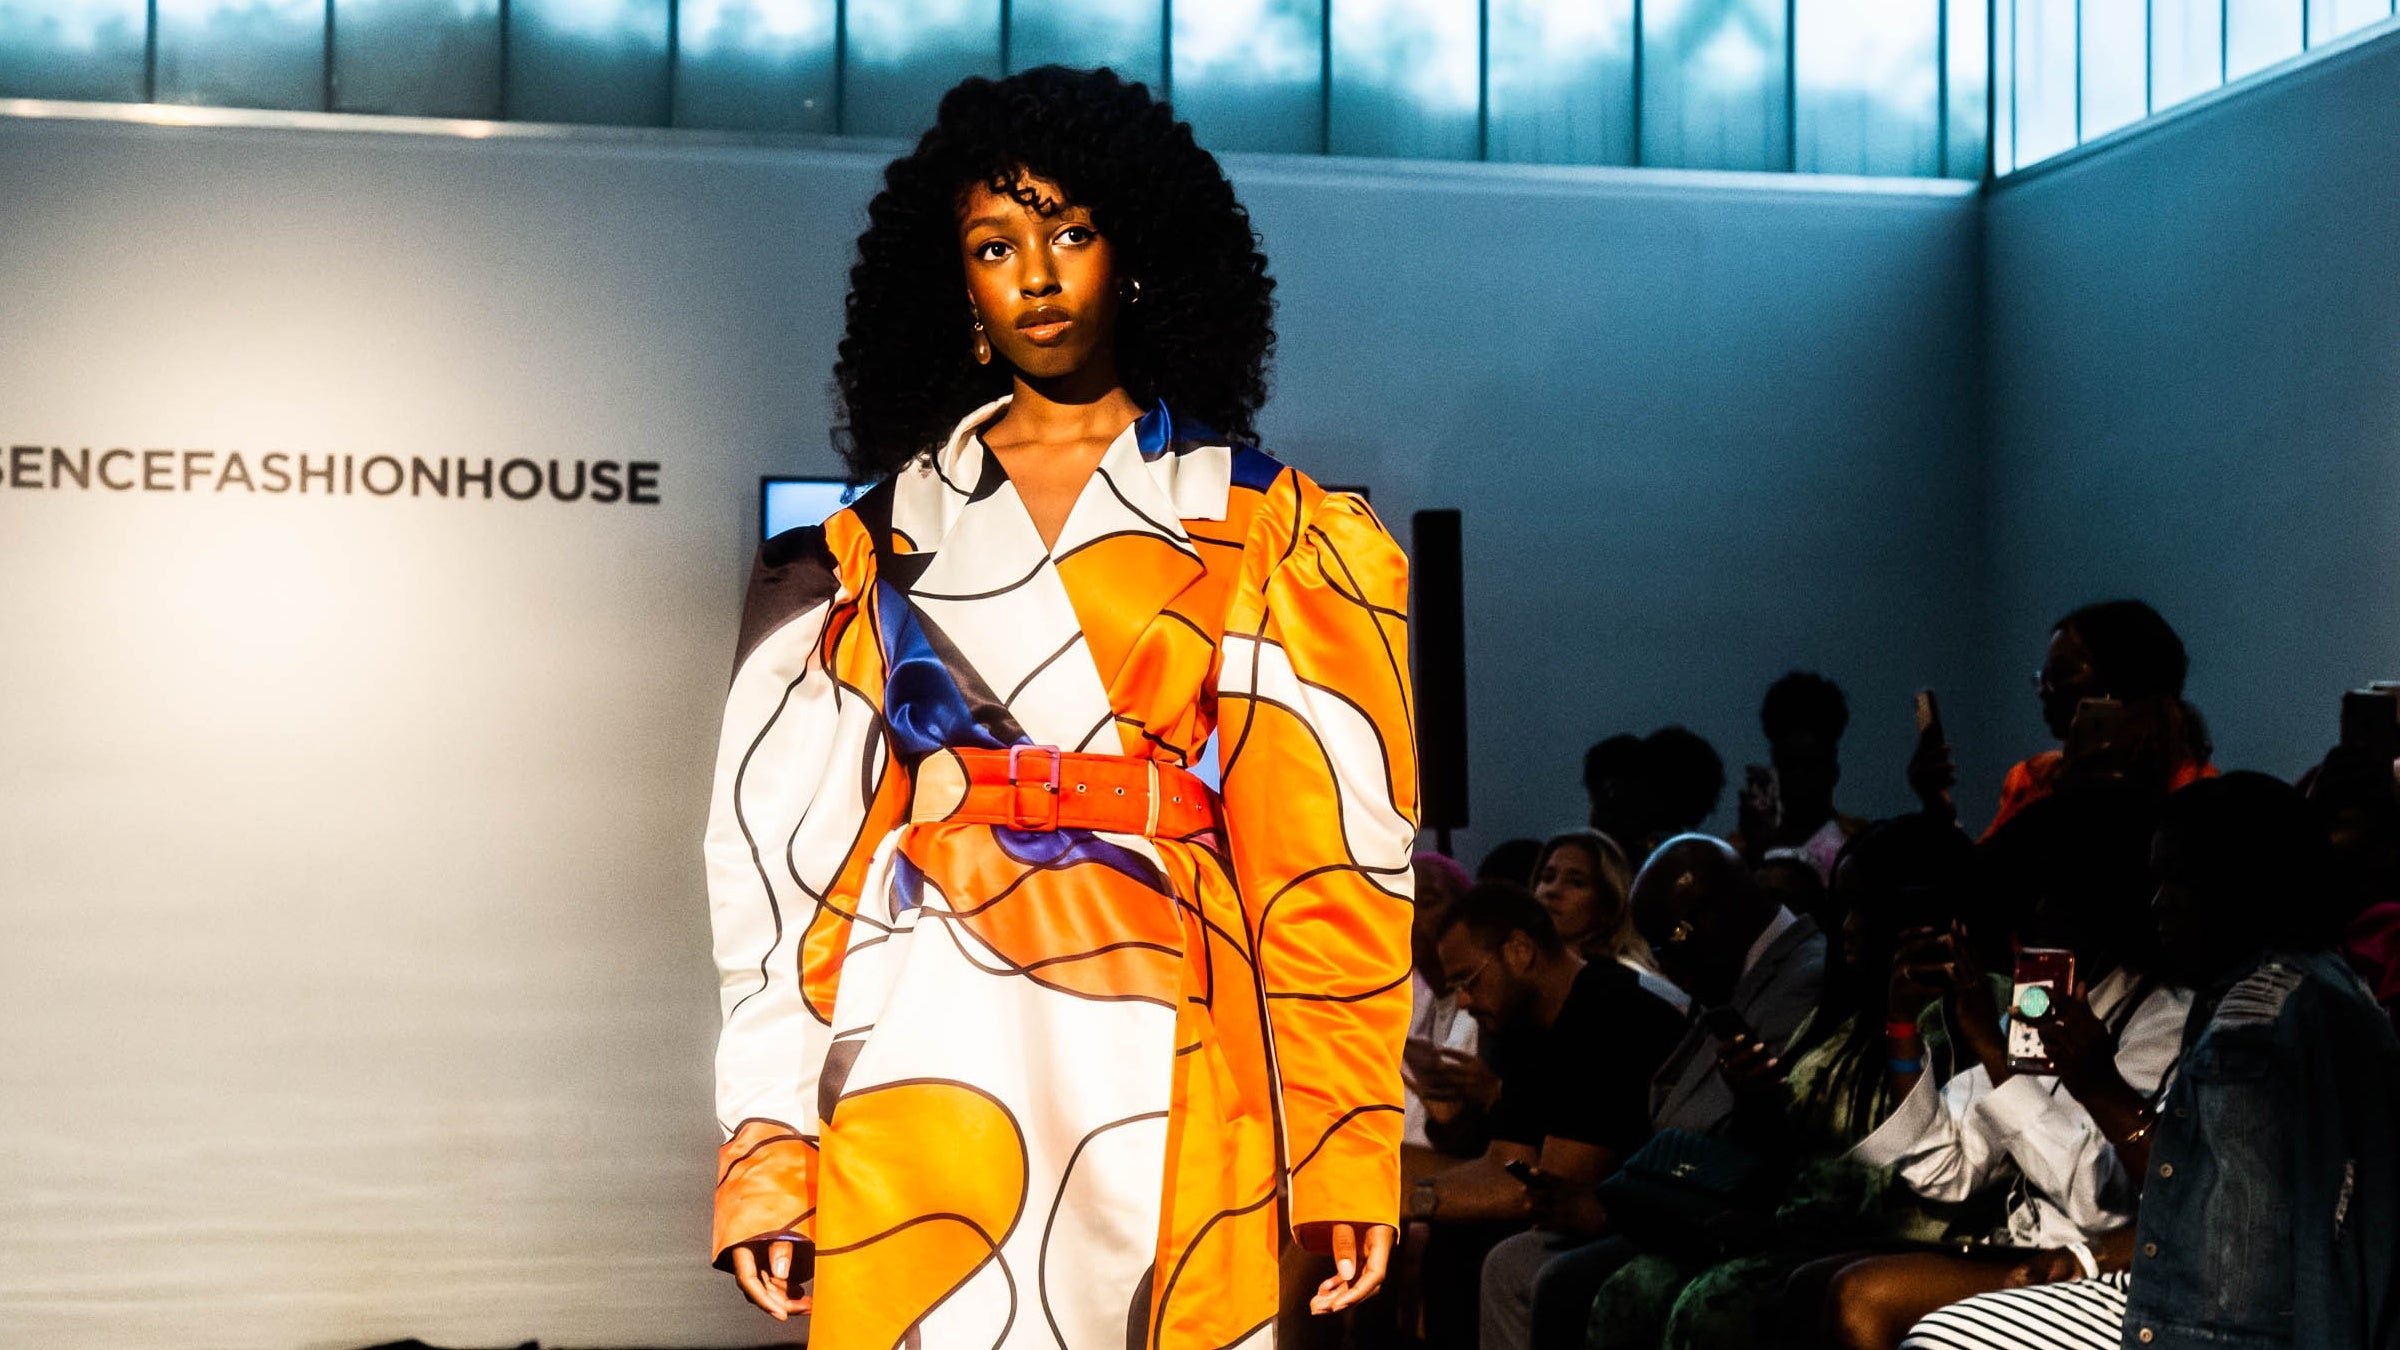 ESSENCE Fashion House NYC: Rich Mnisi Sends Sleek Looks Down The ESSENCE Runway